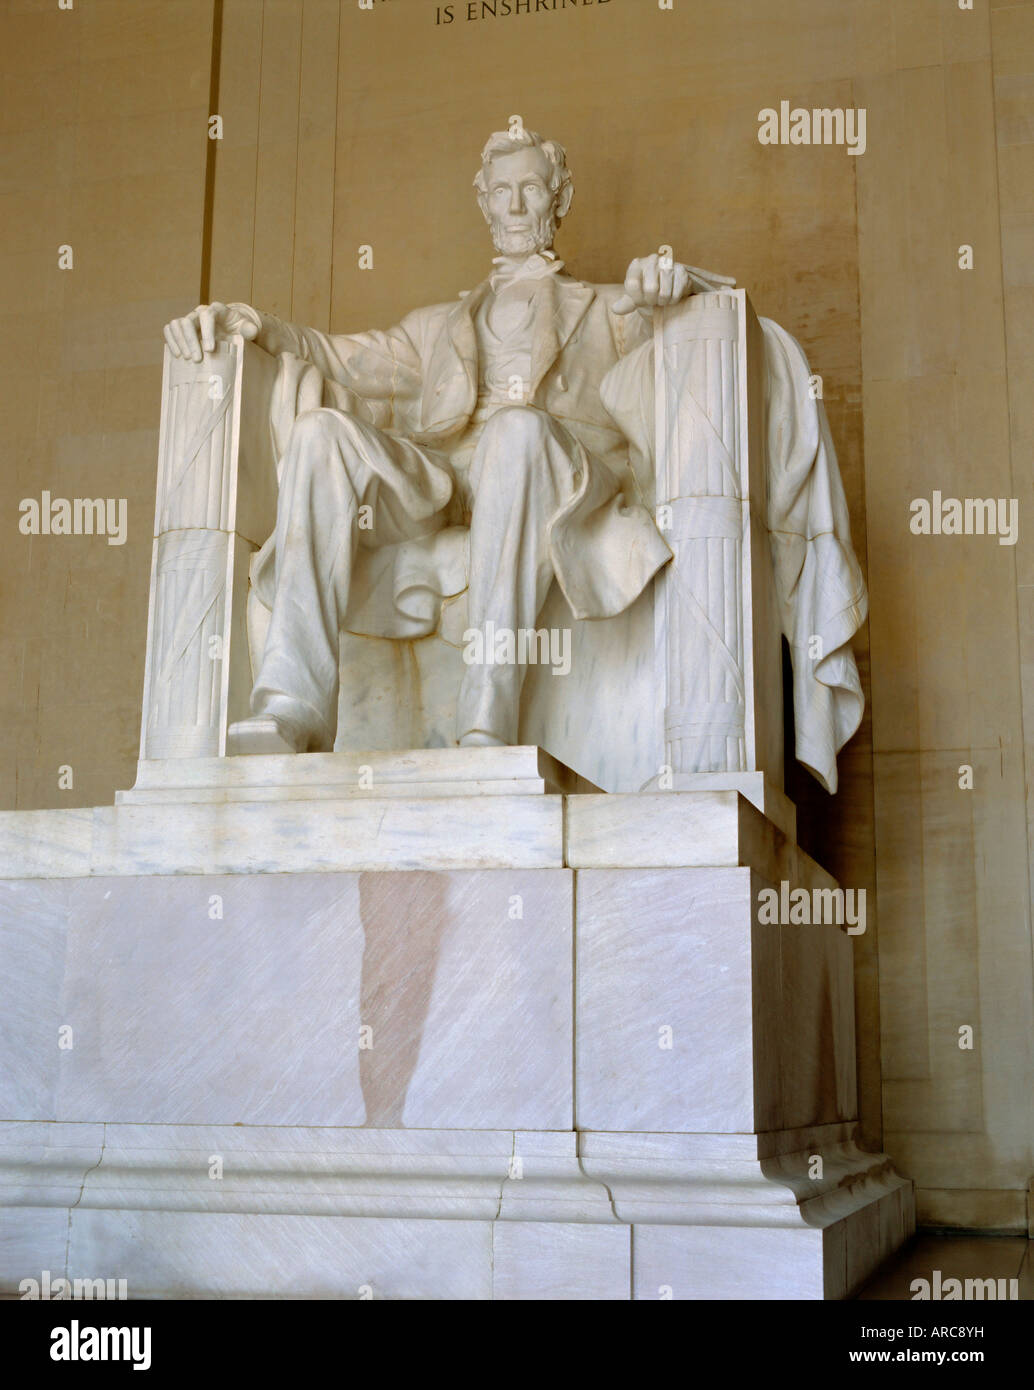 Statue d'Abraham Lincoln, Lincoln Memorial, Washington DC, USA Banque D'Images